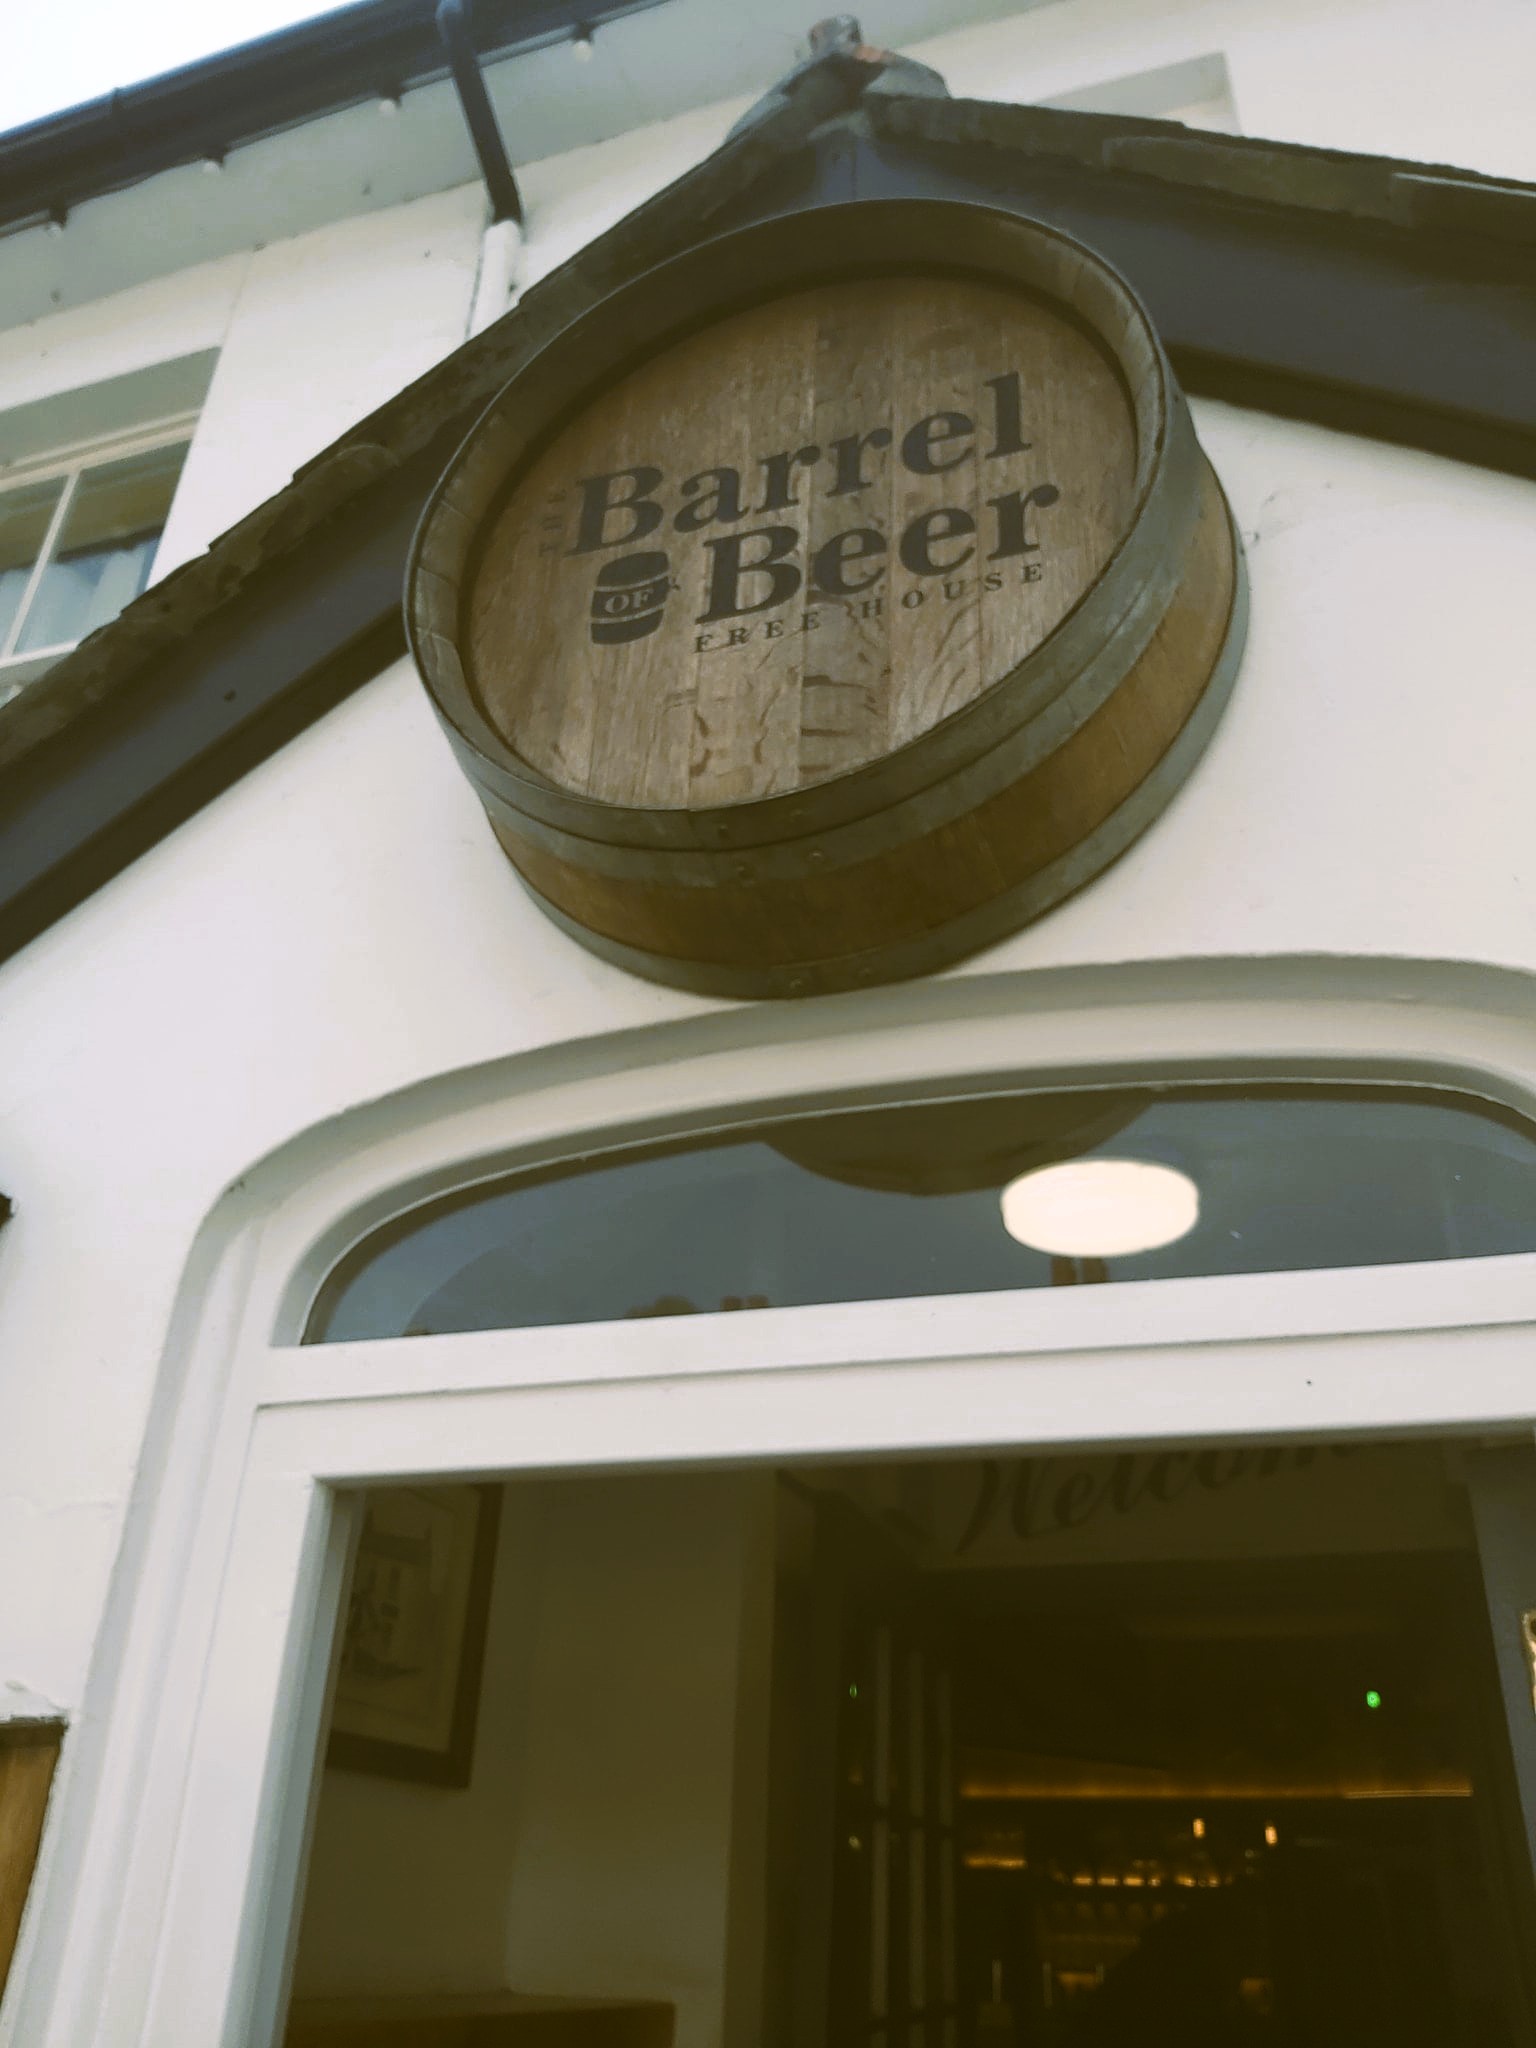 The sign above the door at the Barrel of Beer pub in Beer, Devon, England.